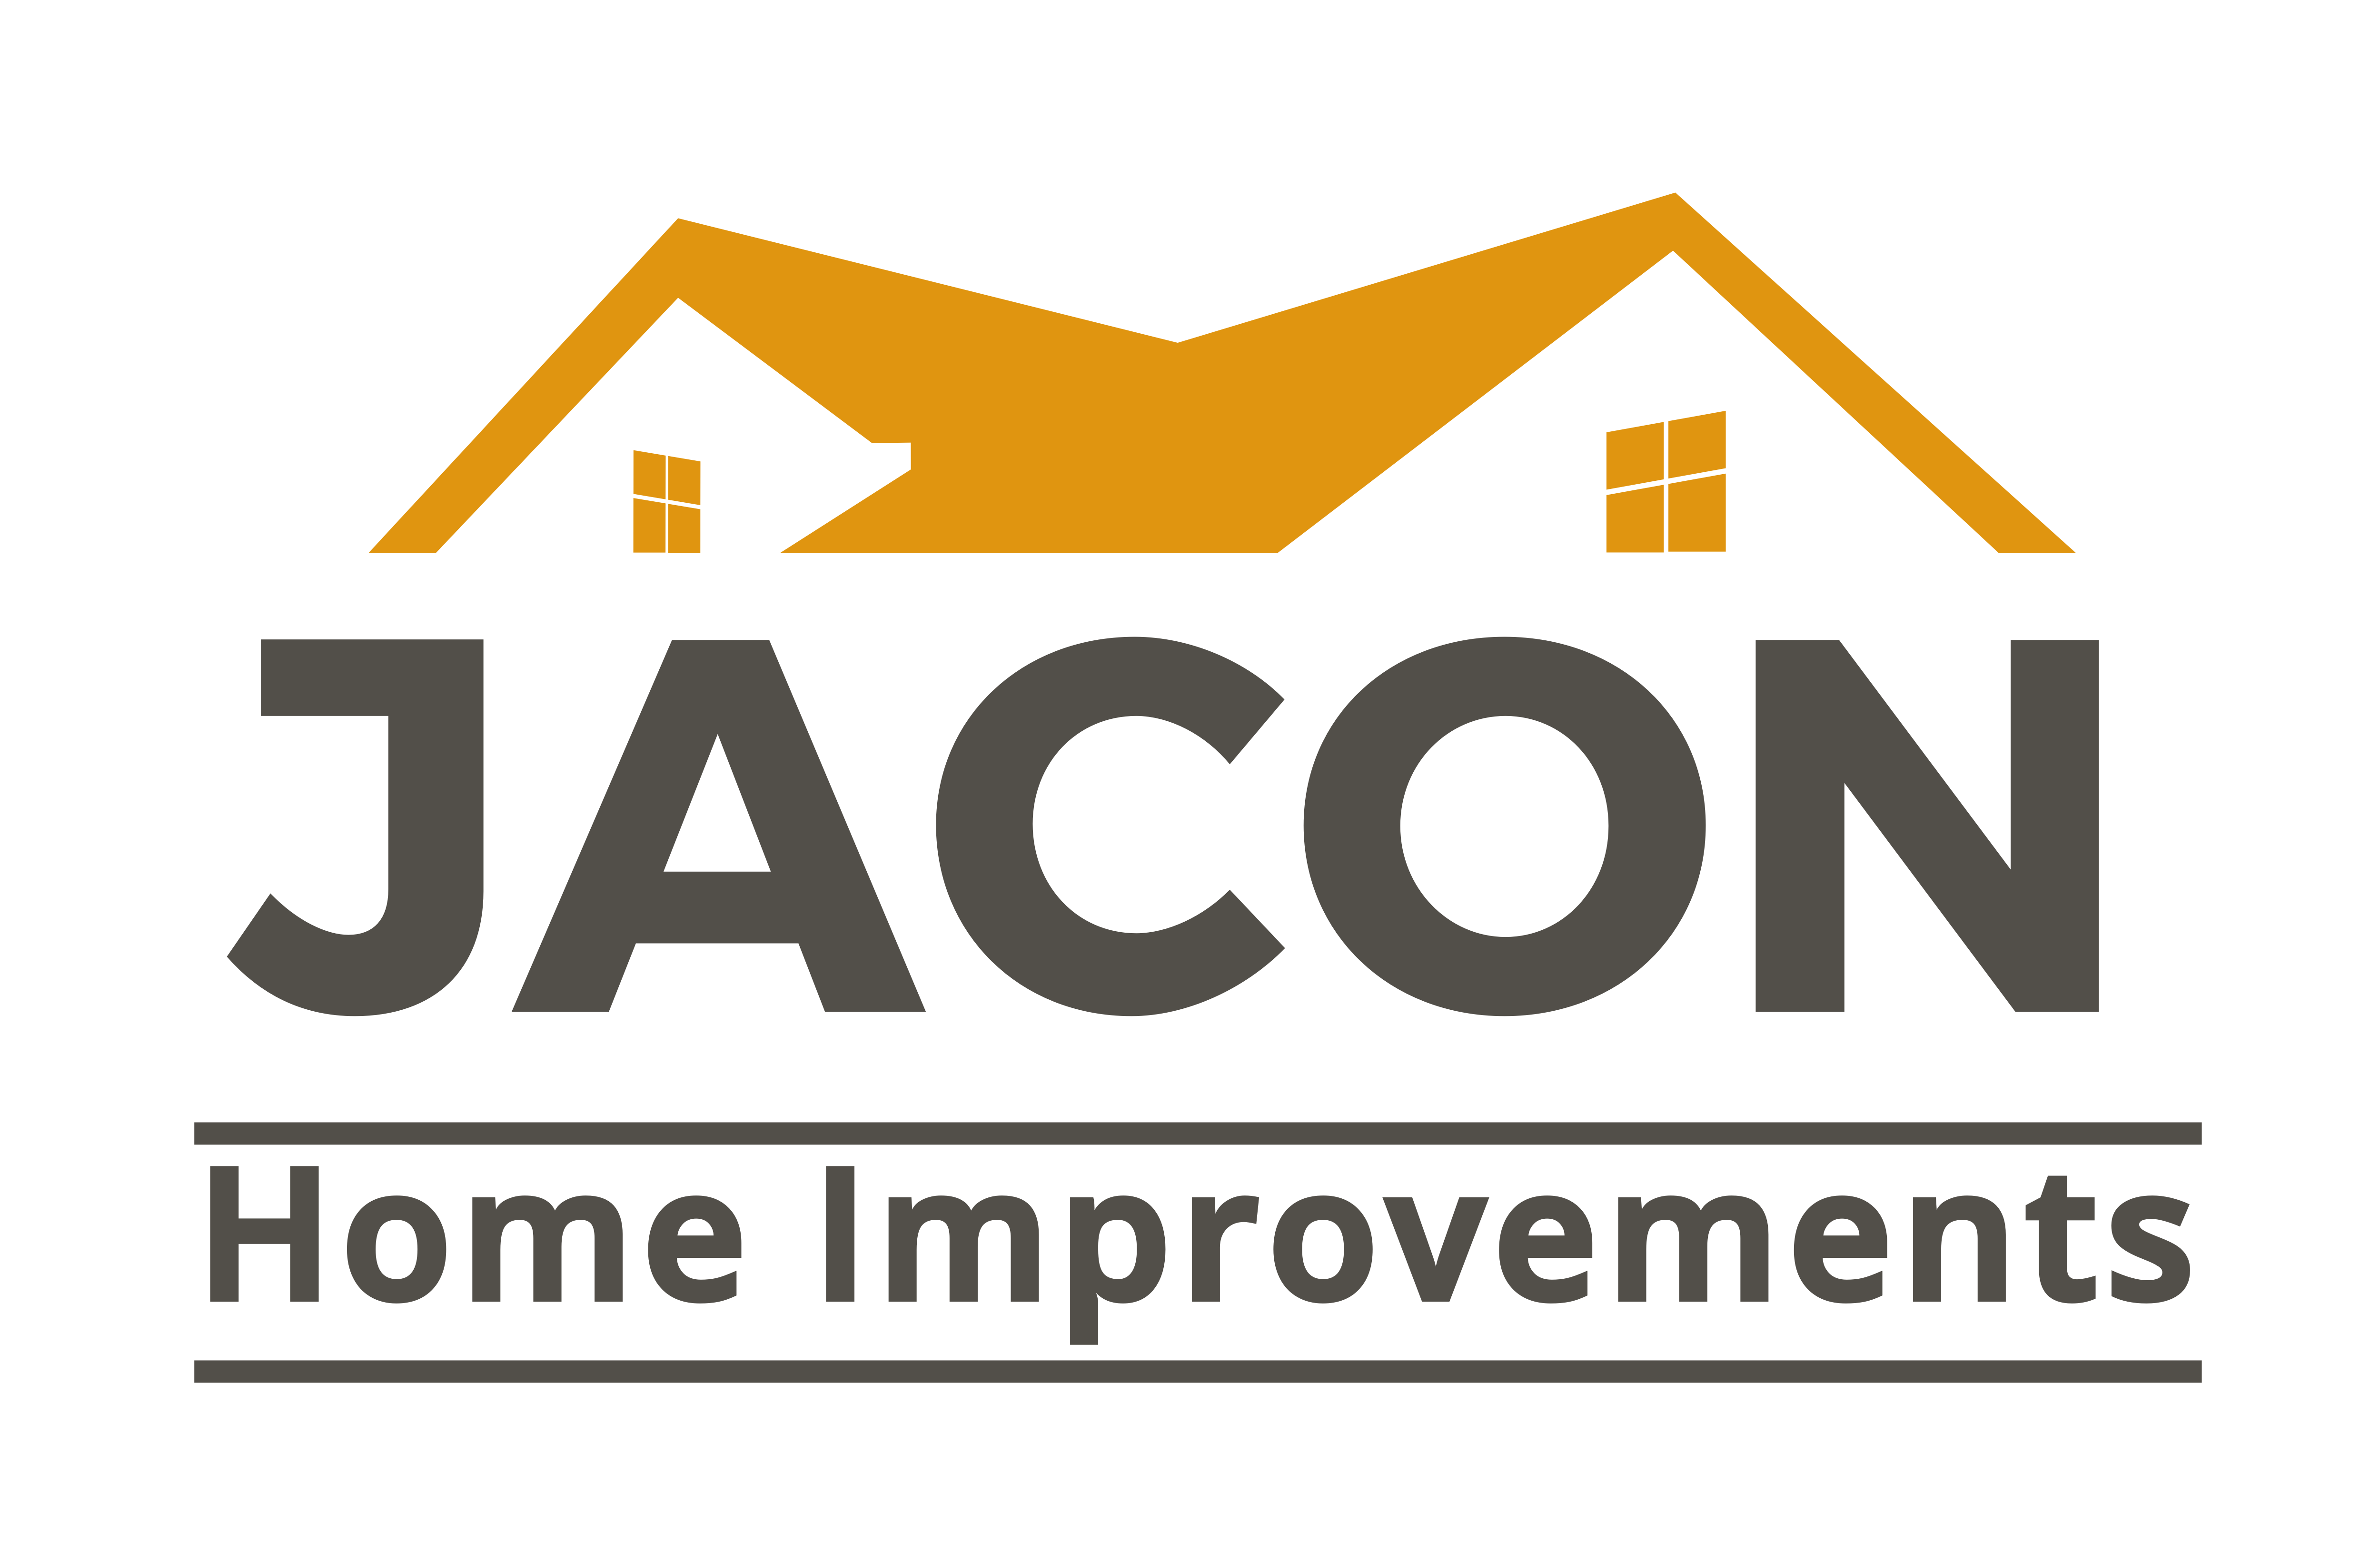 JACON Home Improvement